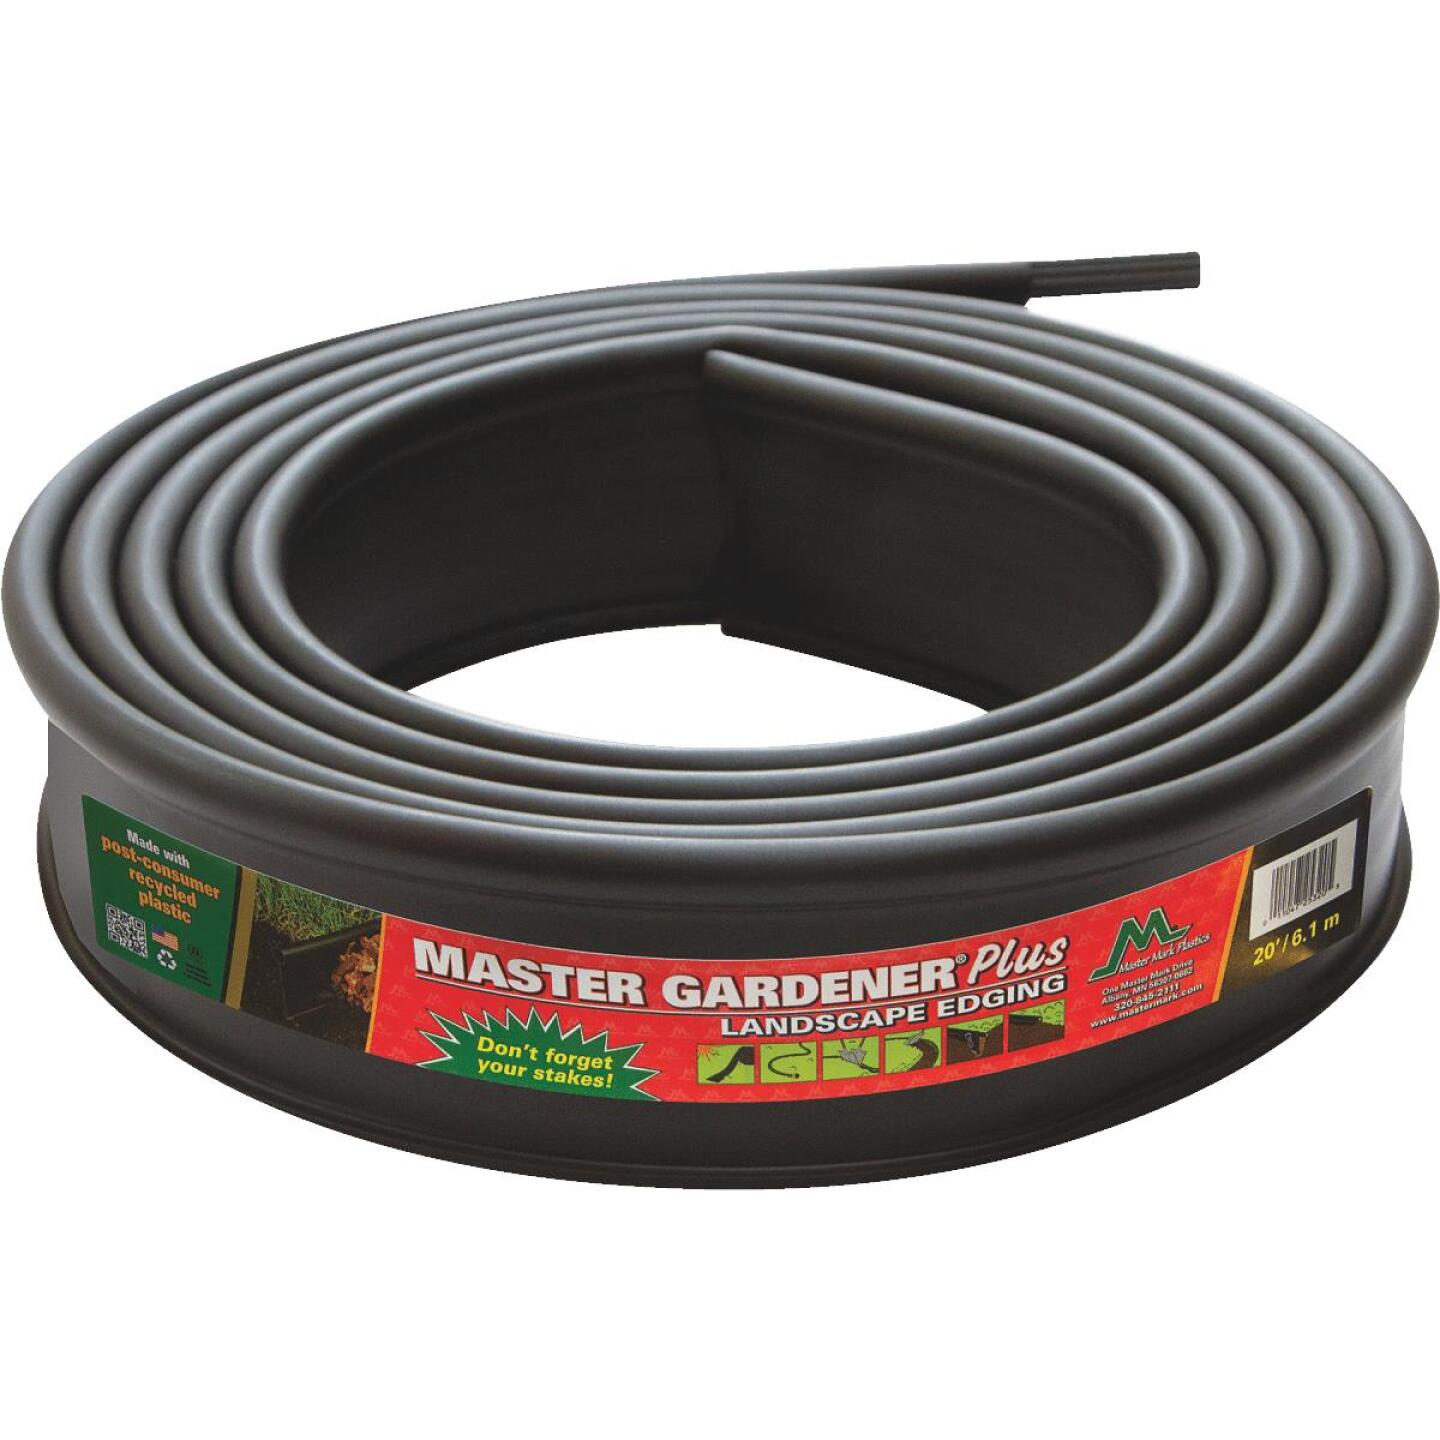 Master Mark, Master Mark Master Gardener Plus Professional 4.5 In. H. x 20 Ft. L. Black Recycled Plastic Lawn Edging